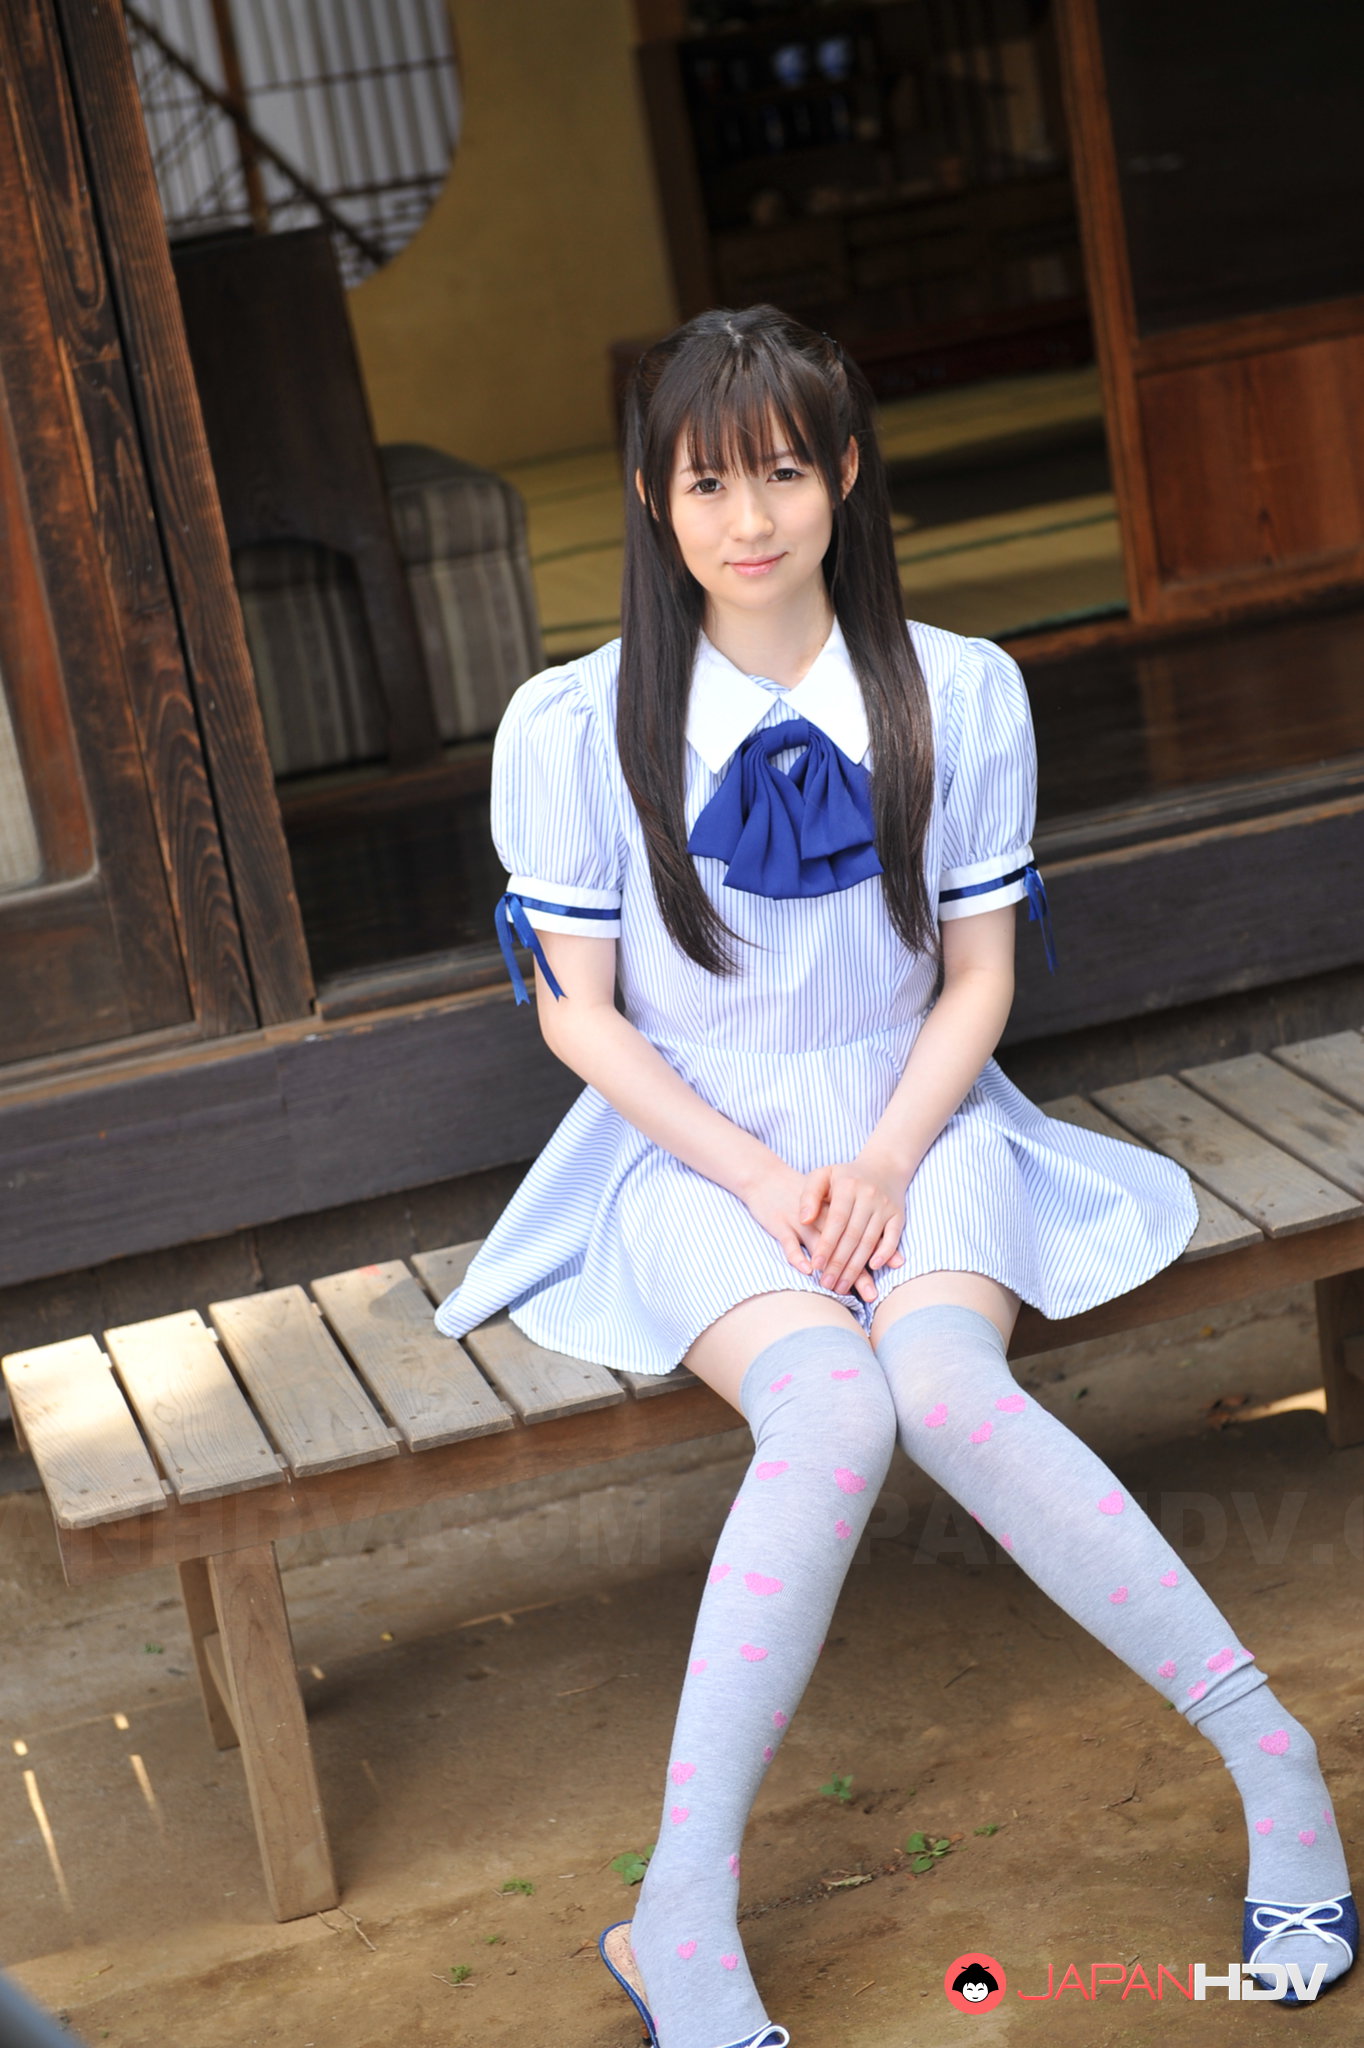 Japanese Teen Clips - Babe In a School Uniform